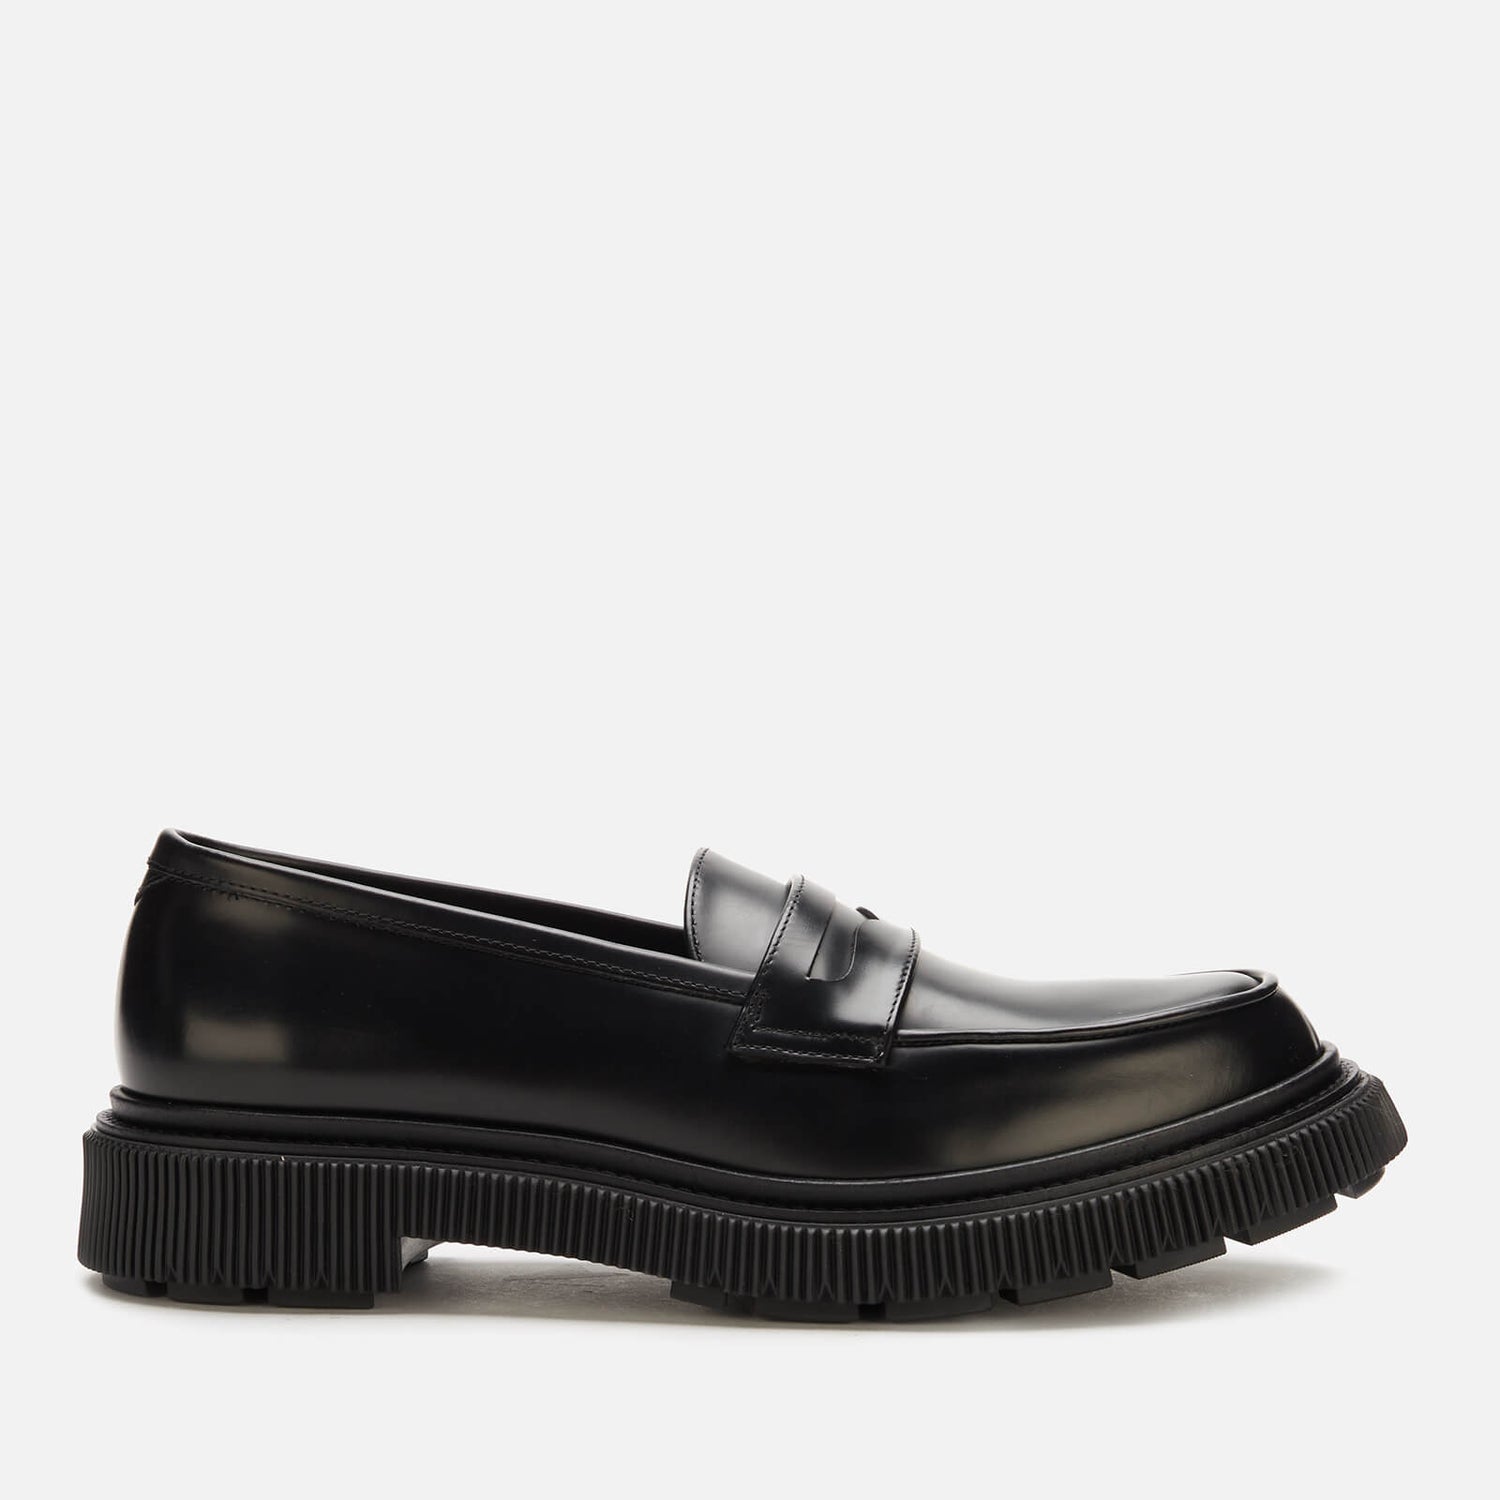 Adieu Men's Type 159 Leather Loafers - Black - UK 7